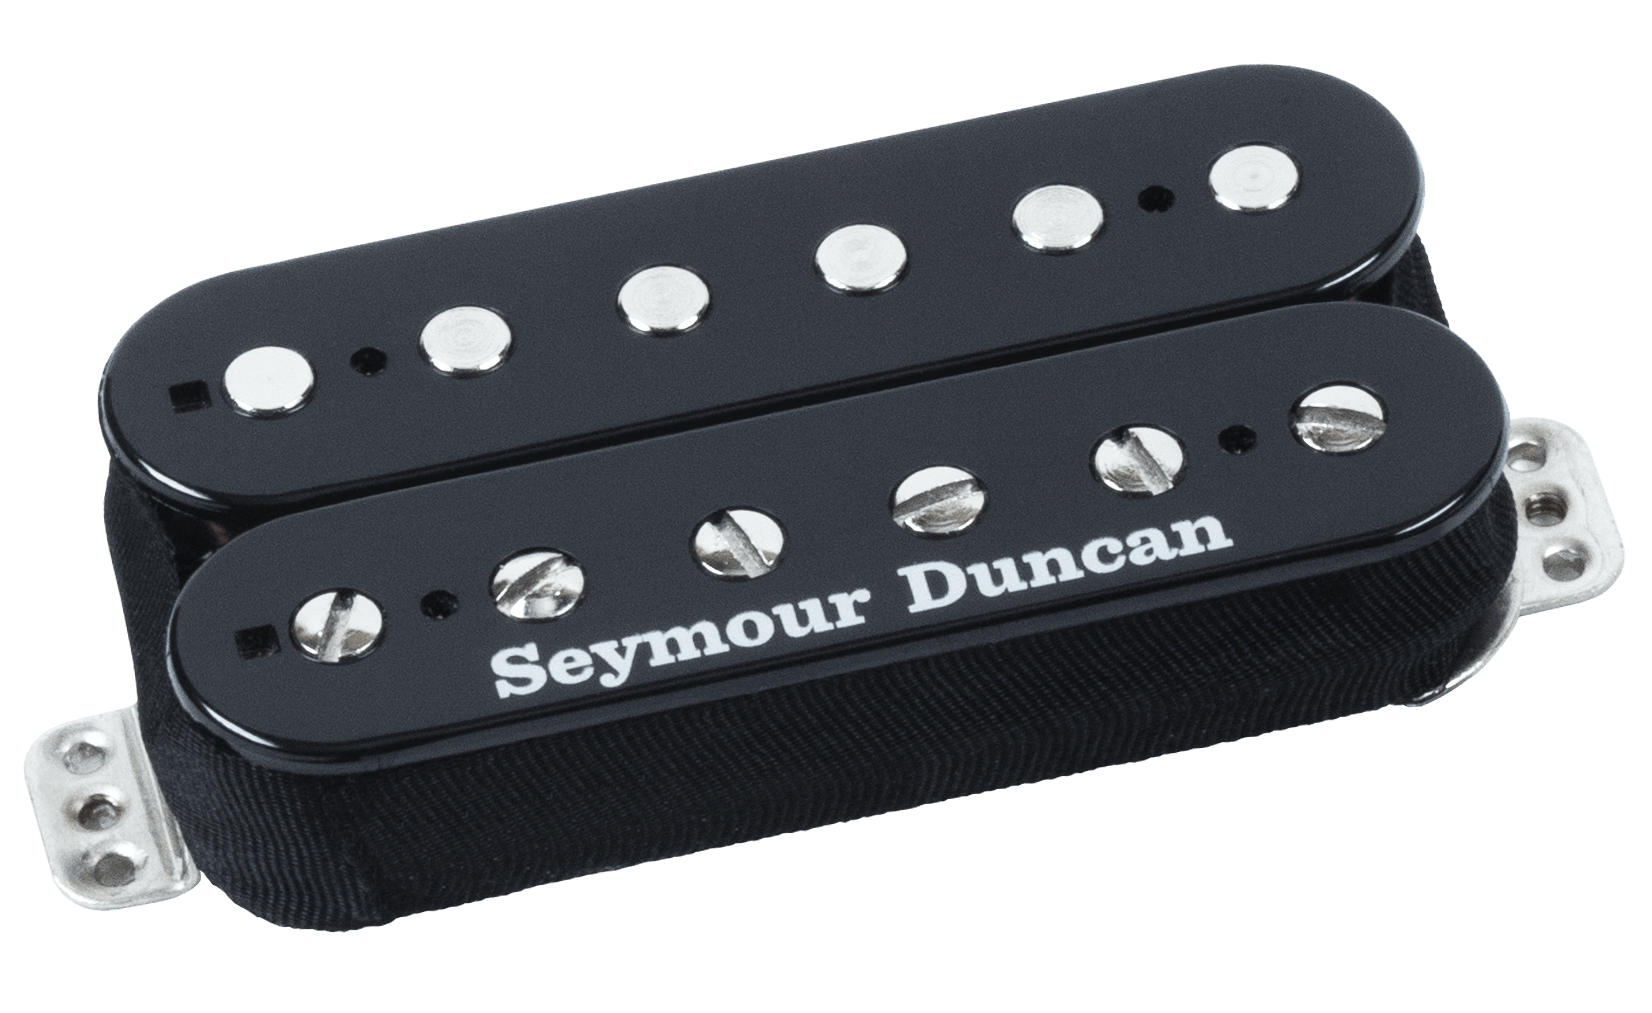 Seymour Duncan Tb-6 Duncan Distortion Trembucker - Bridge - Black - Pastilla guitarra eléctrica - Variation 2